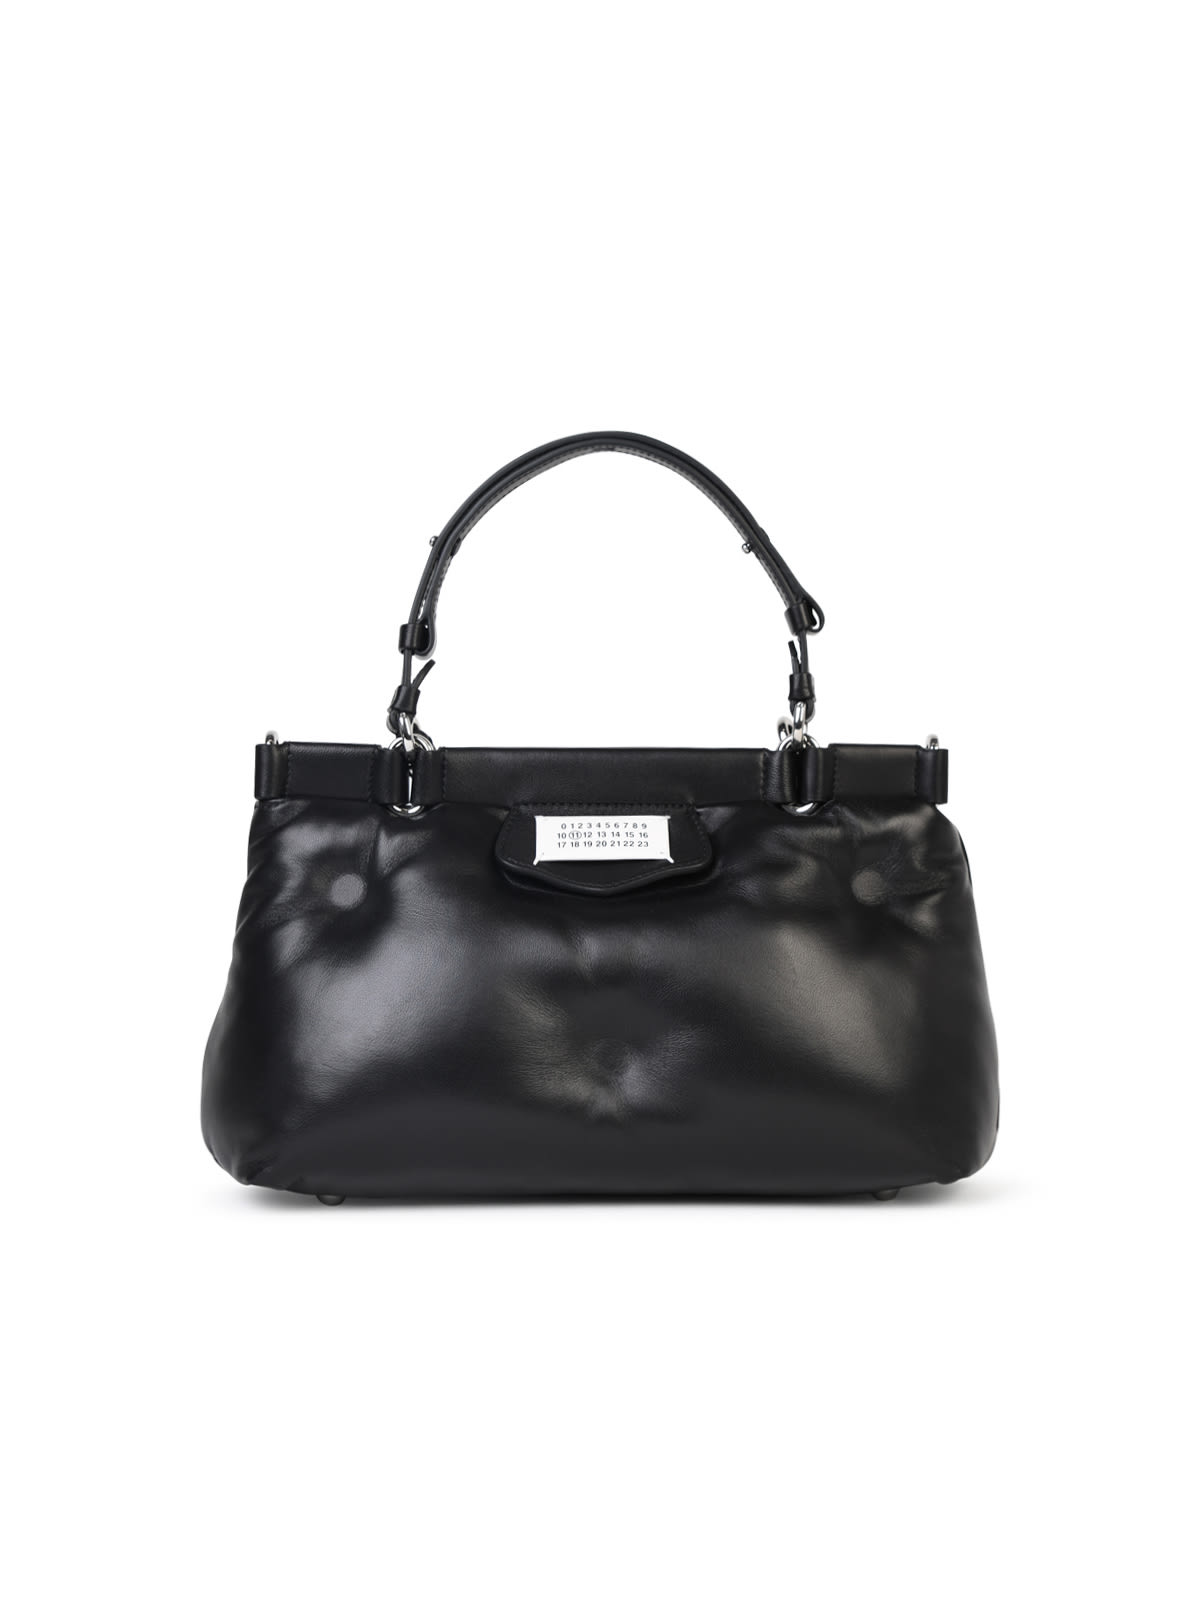 Maison Margiela Glam Slam Black Leather Bag In Metallic